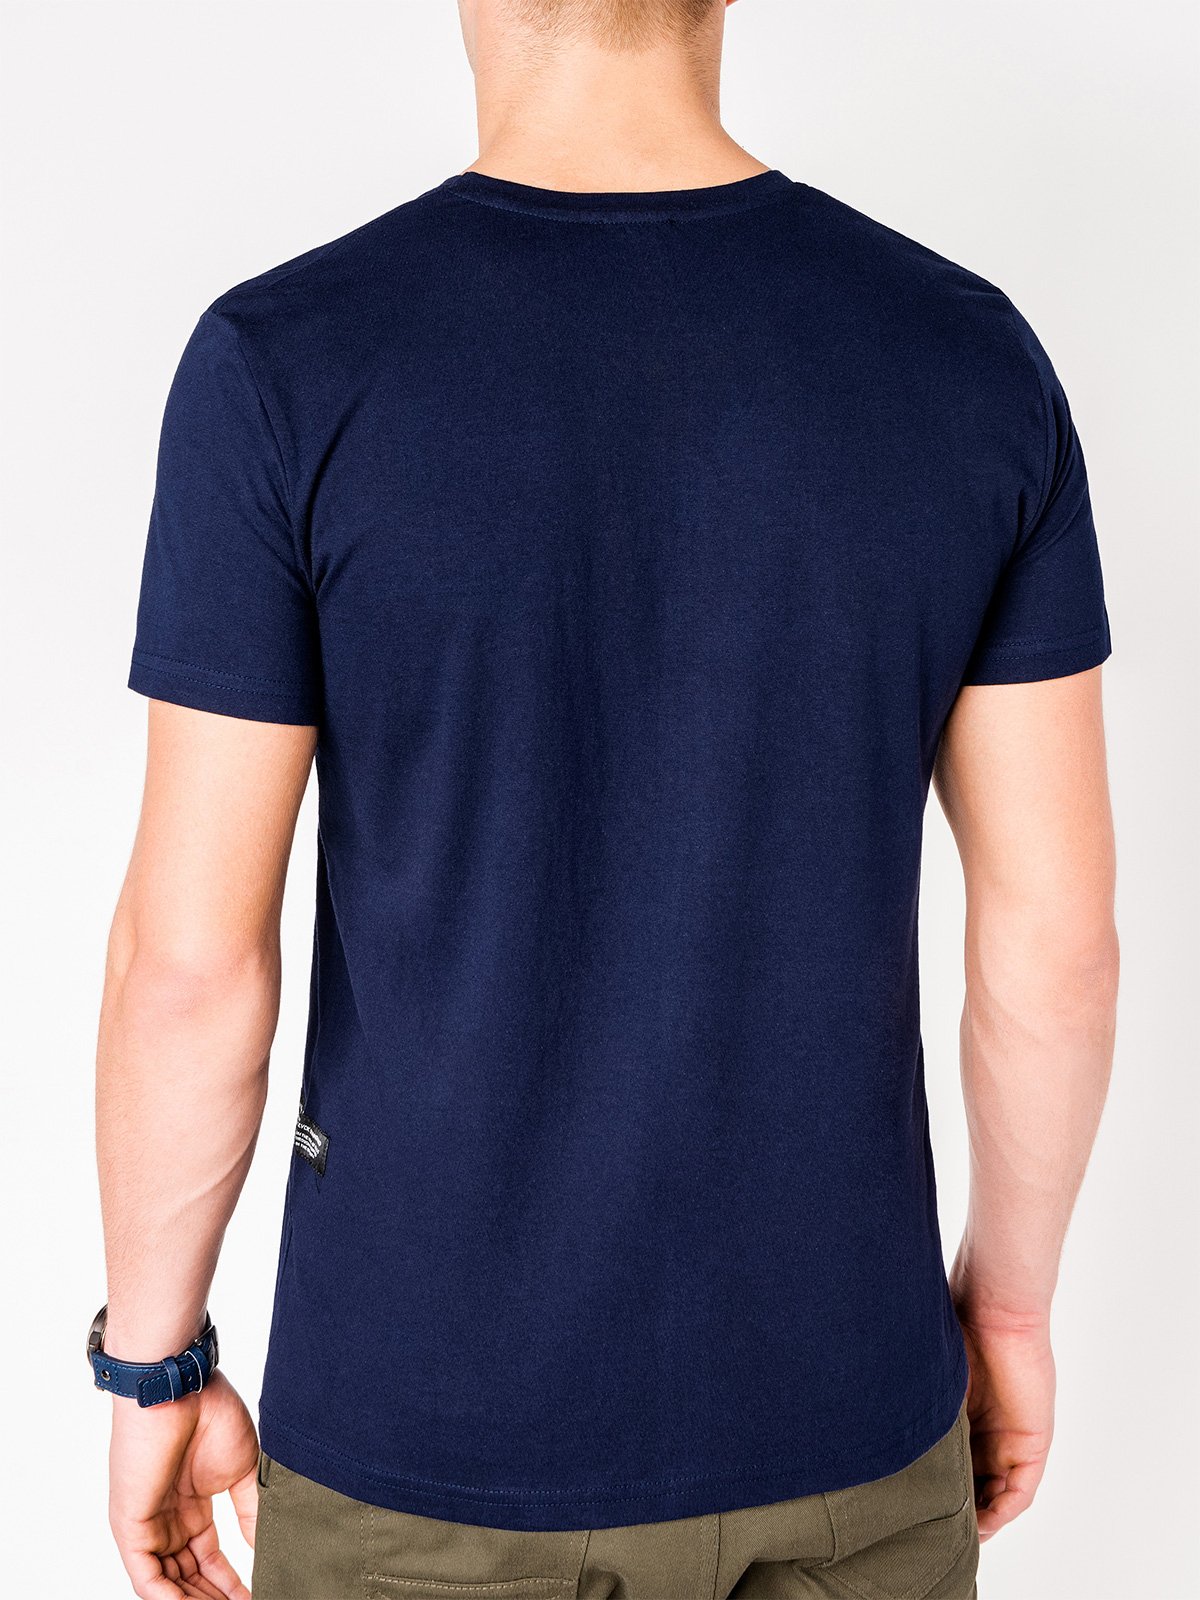 Men's plain t-shirt S824 - navy | MODONE wholesale - Clothing For Men